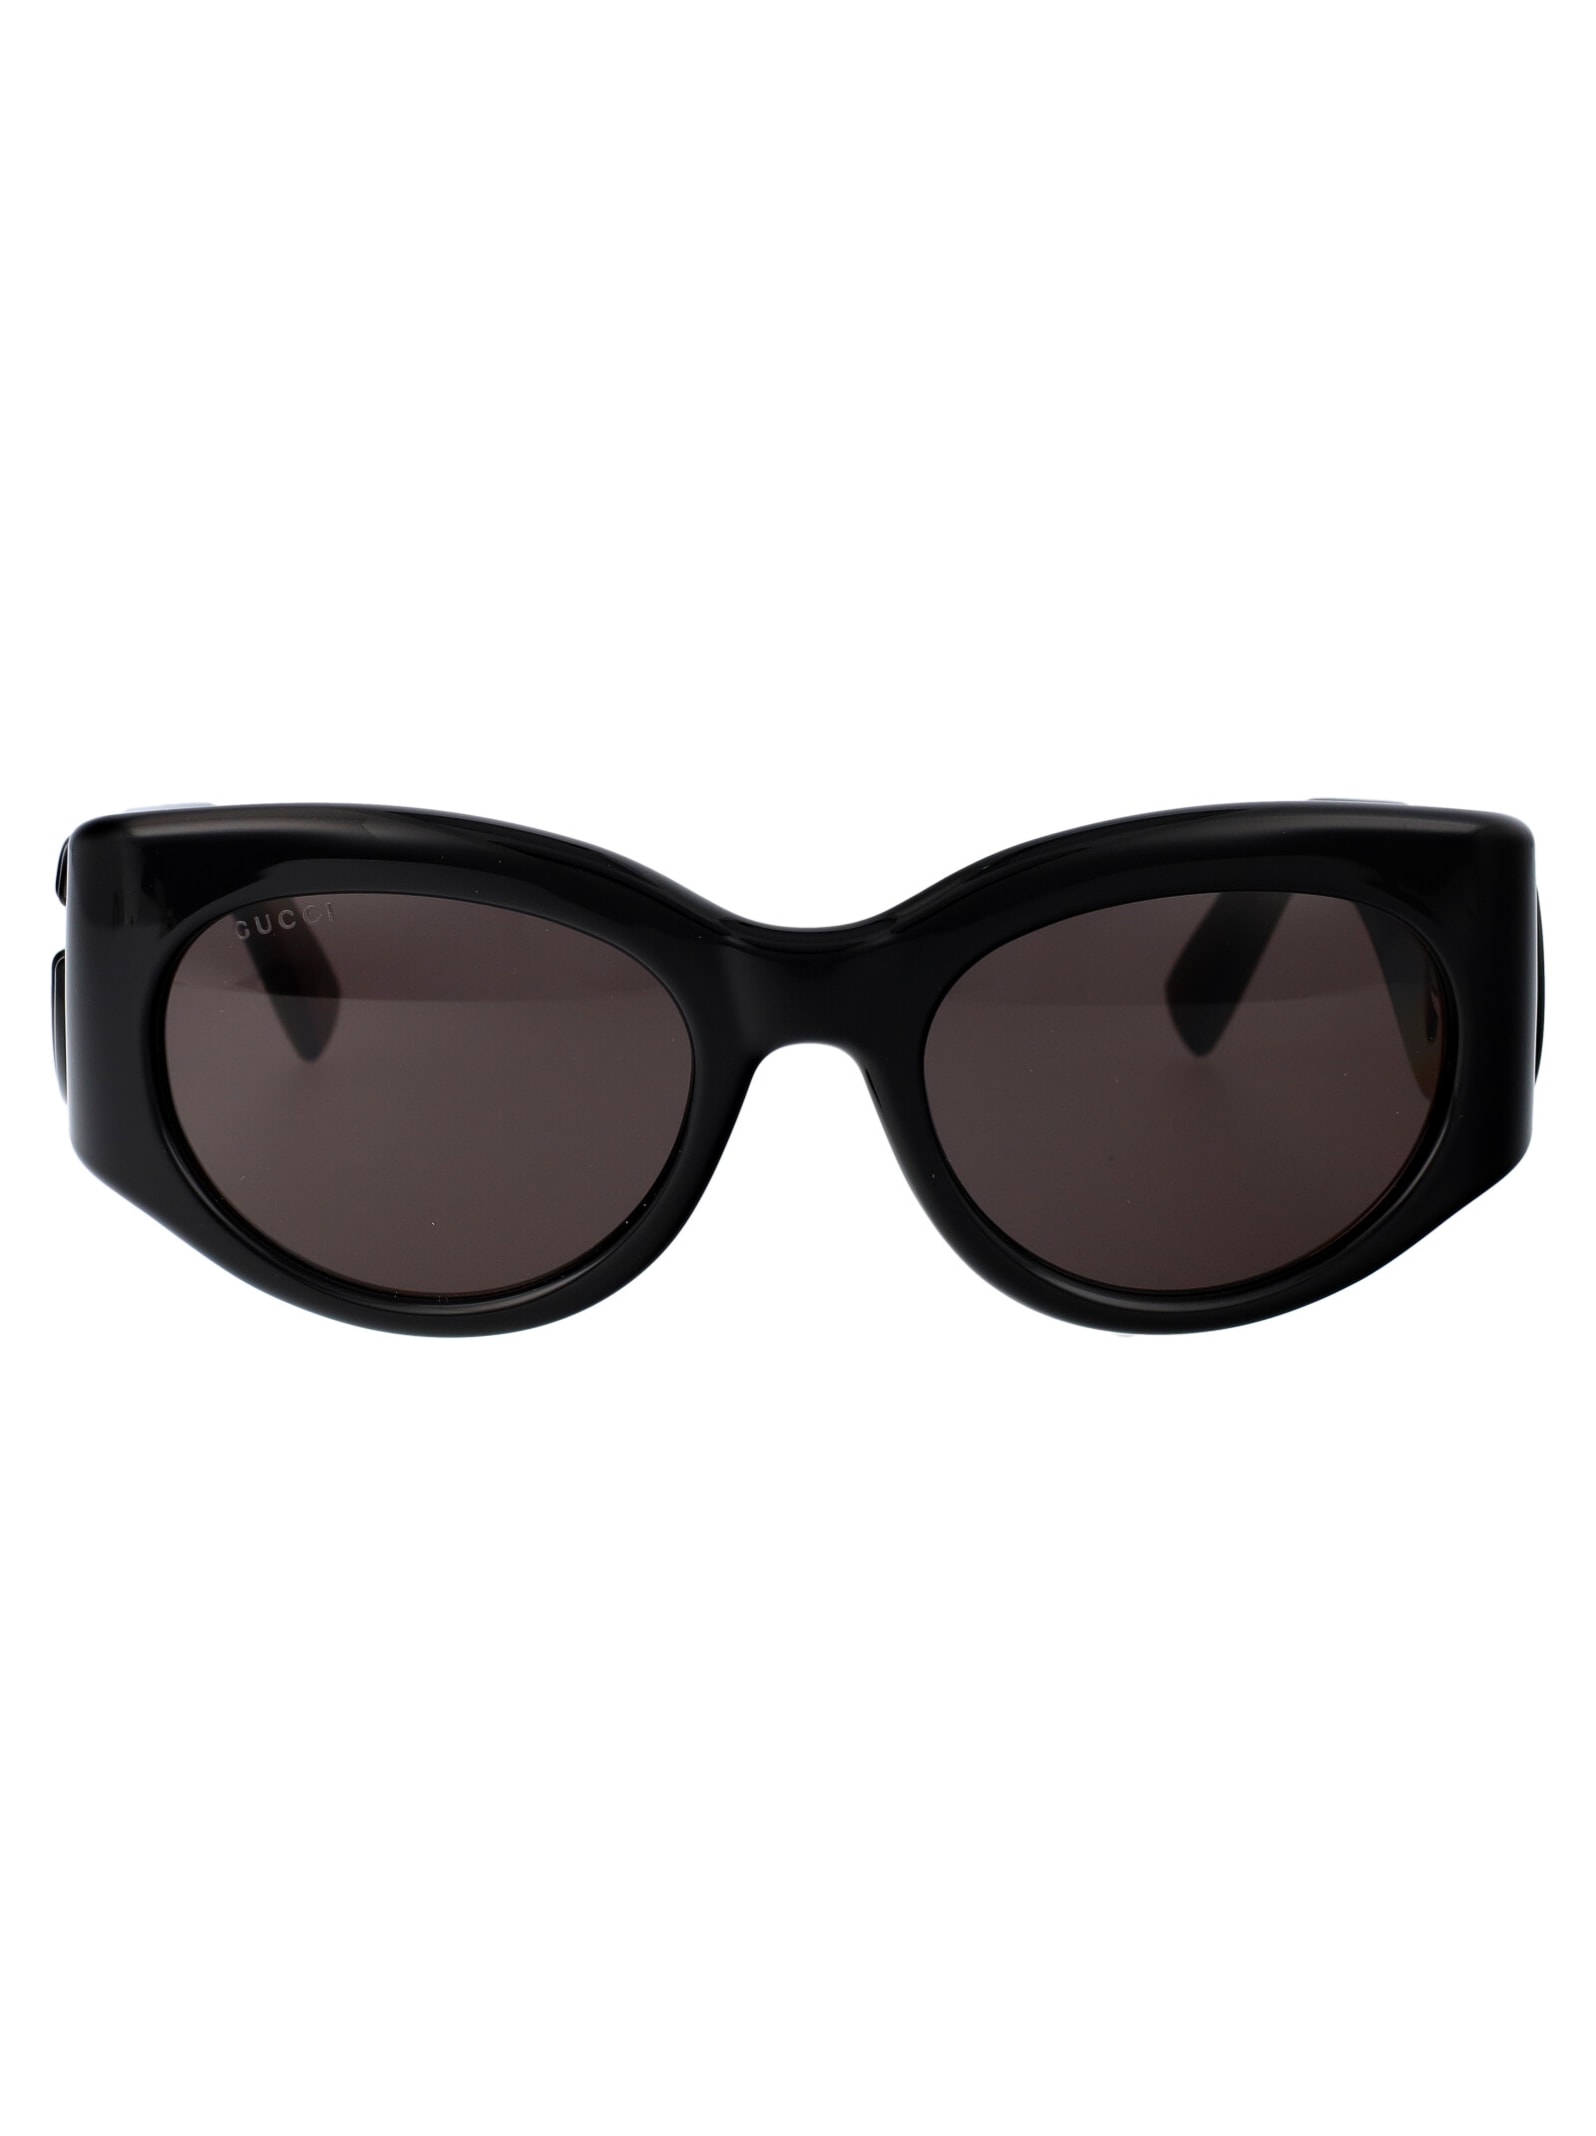 Gg1544s Sunglasses